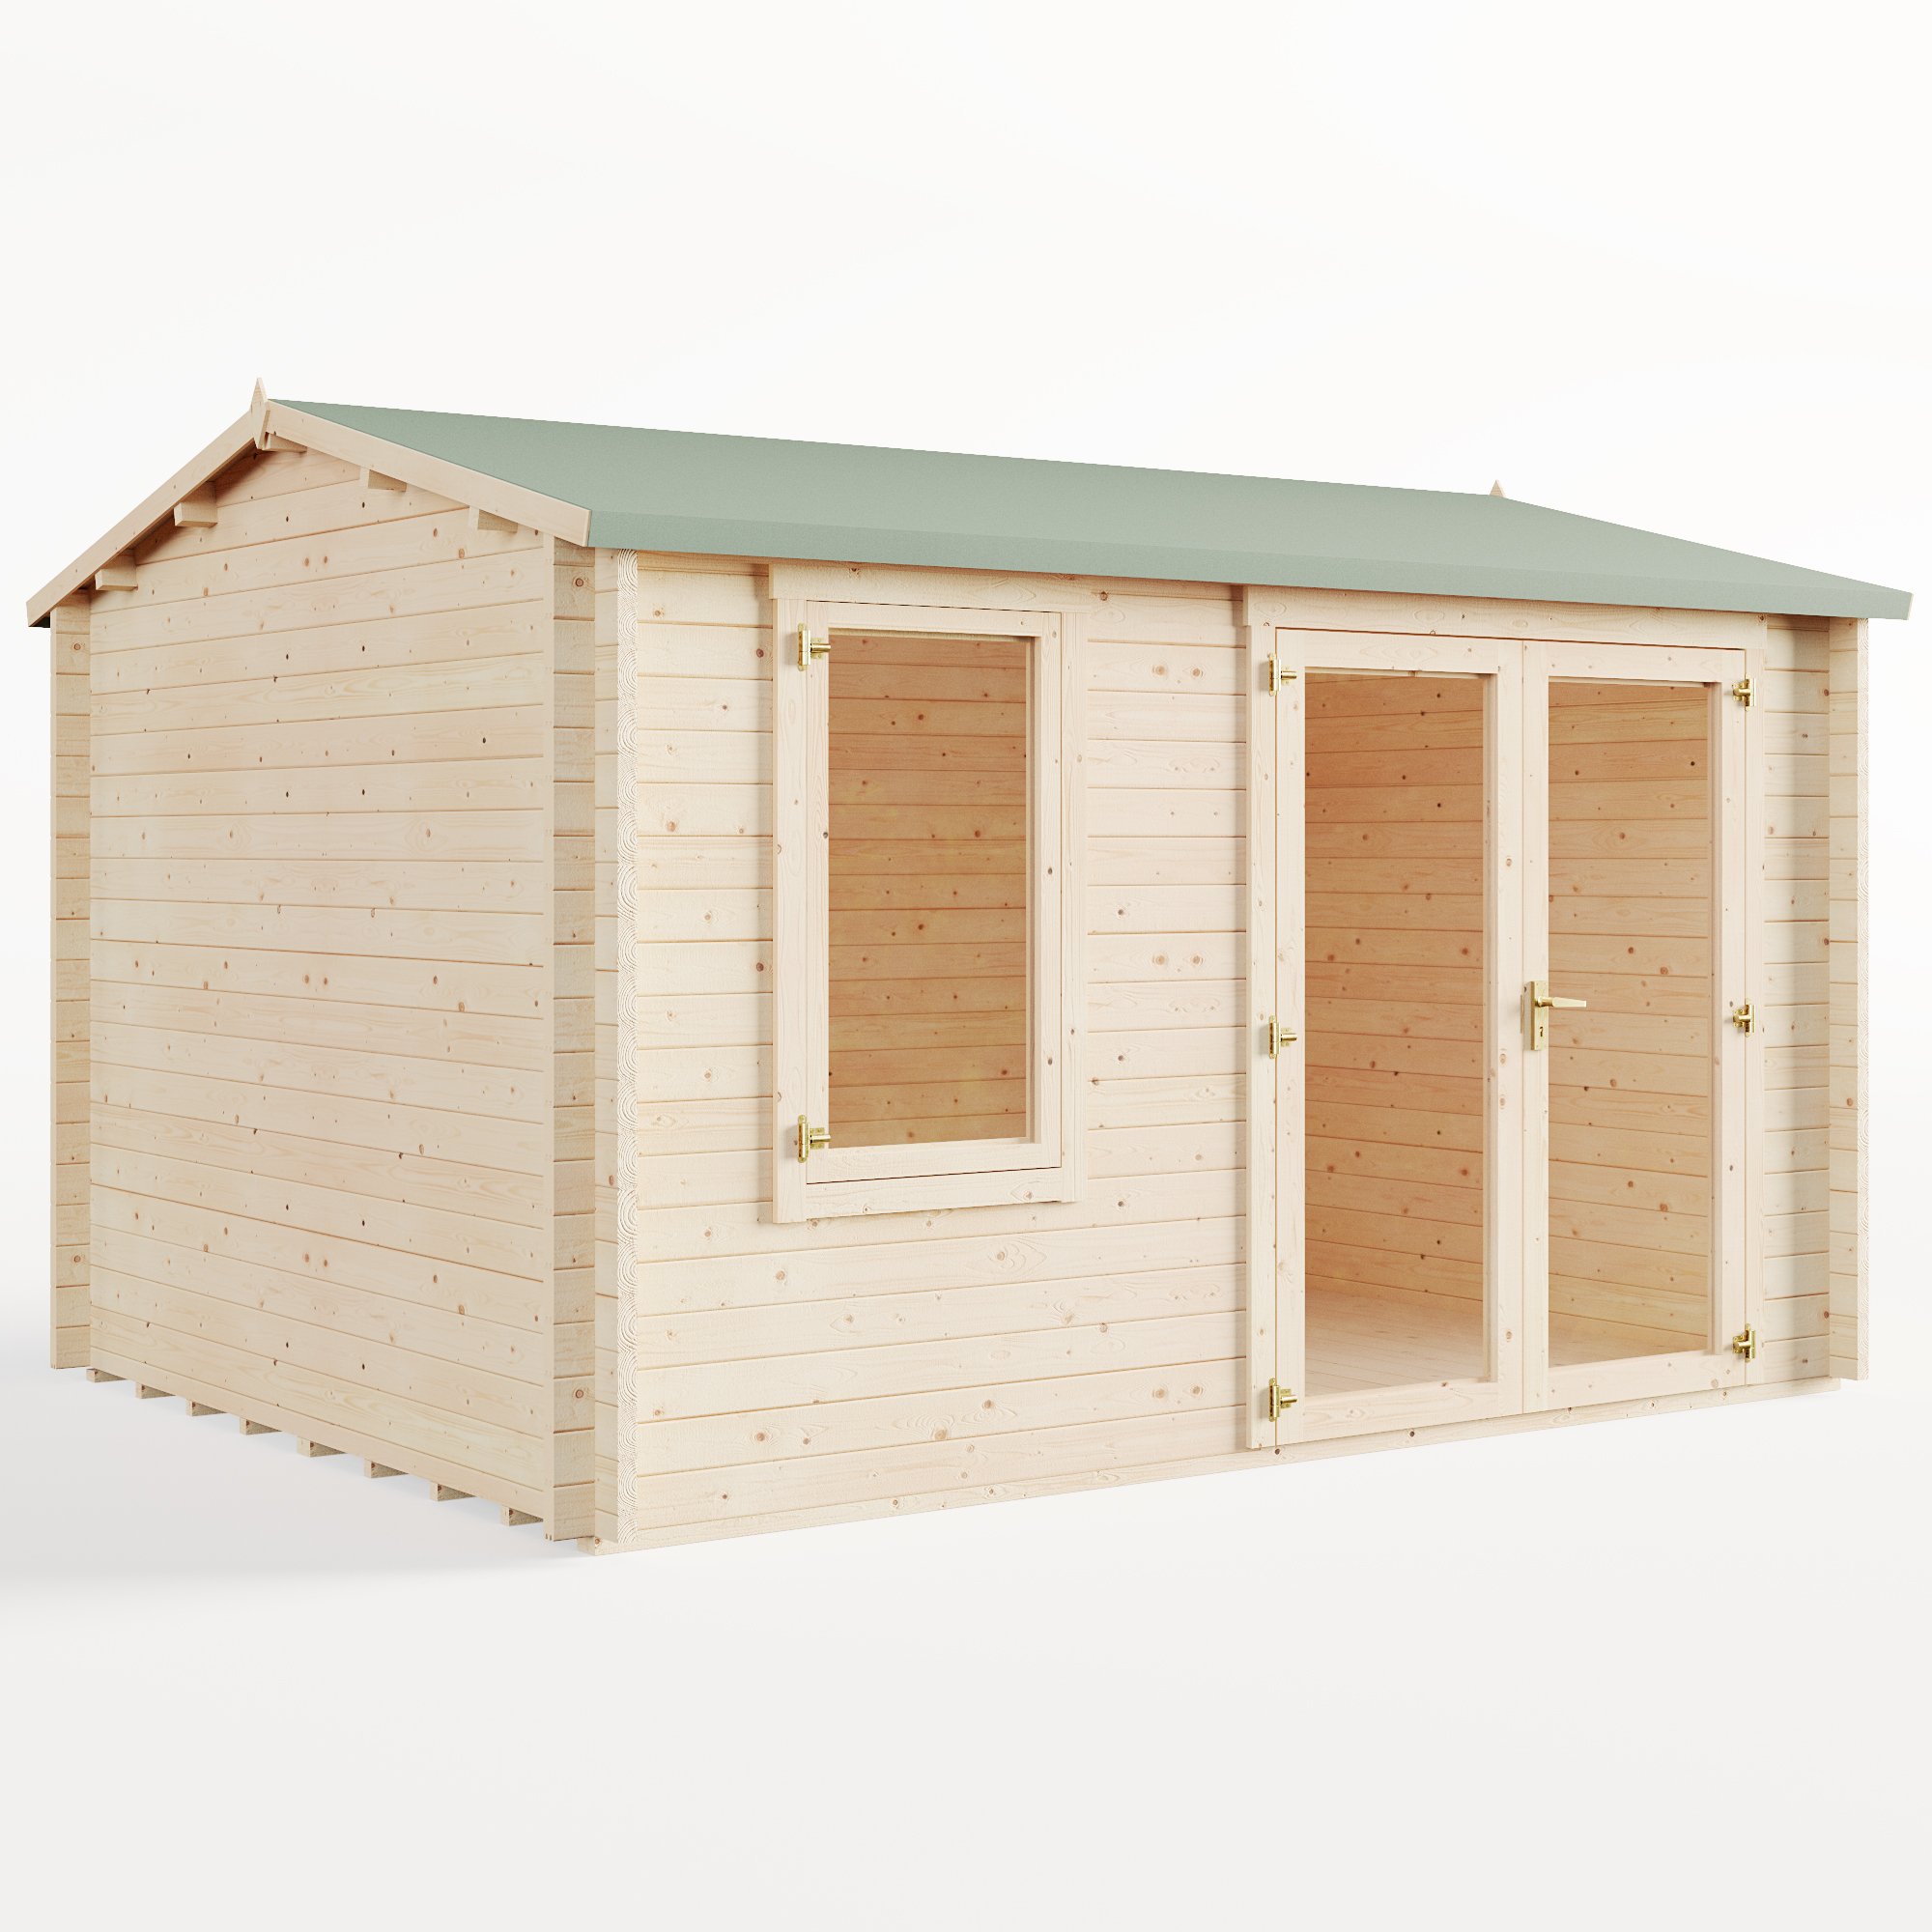 4.0m x 3.0m Pressure Treated Log Cabin - BillyOh Devon Log Cabin - 44mm Tongue & Groove Wooden Garden Building